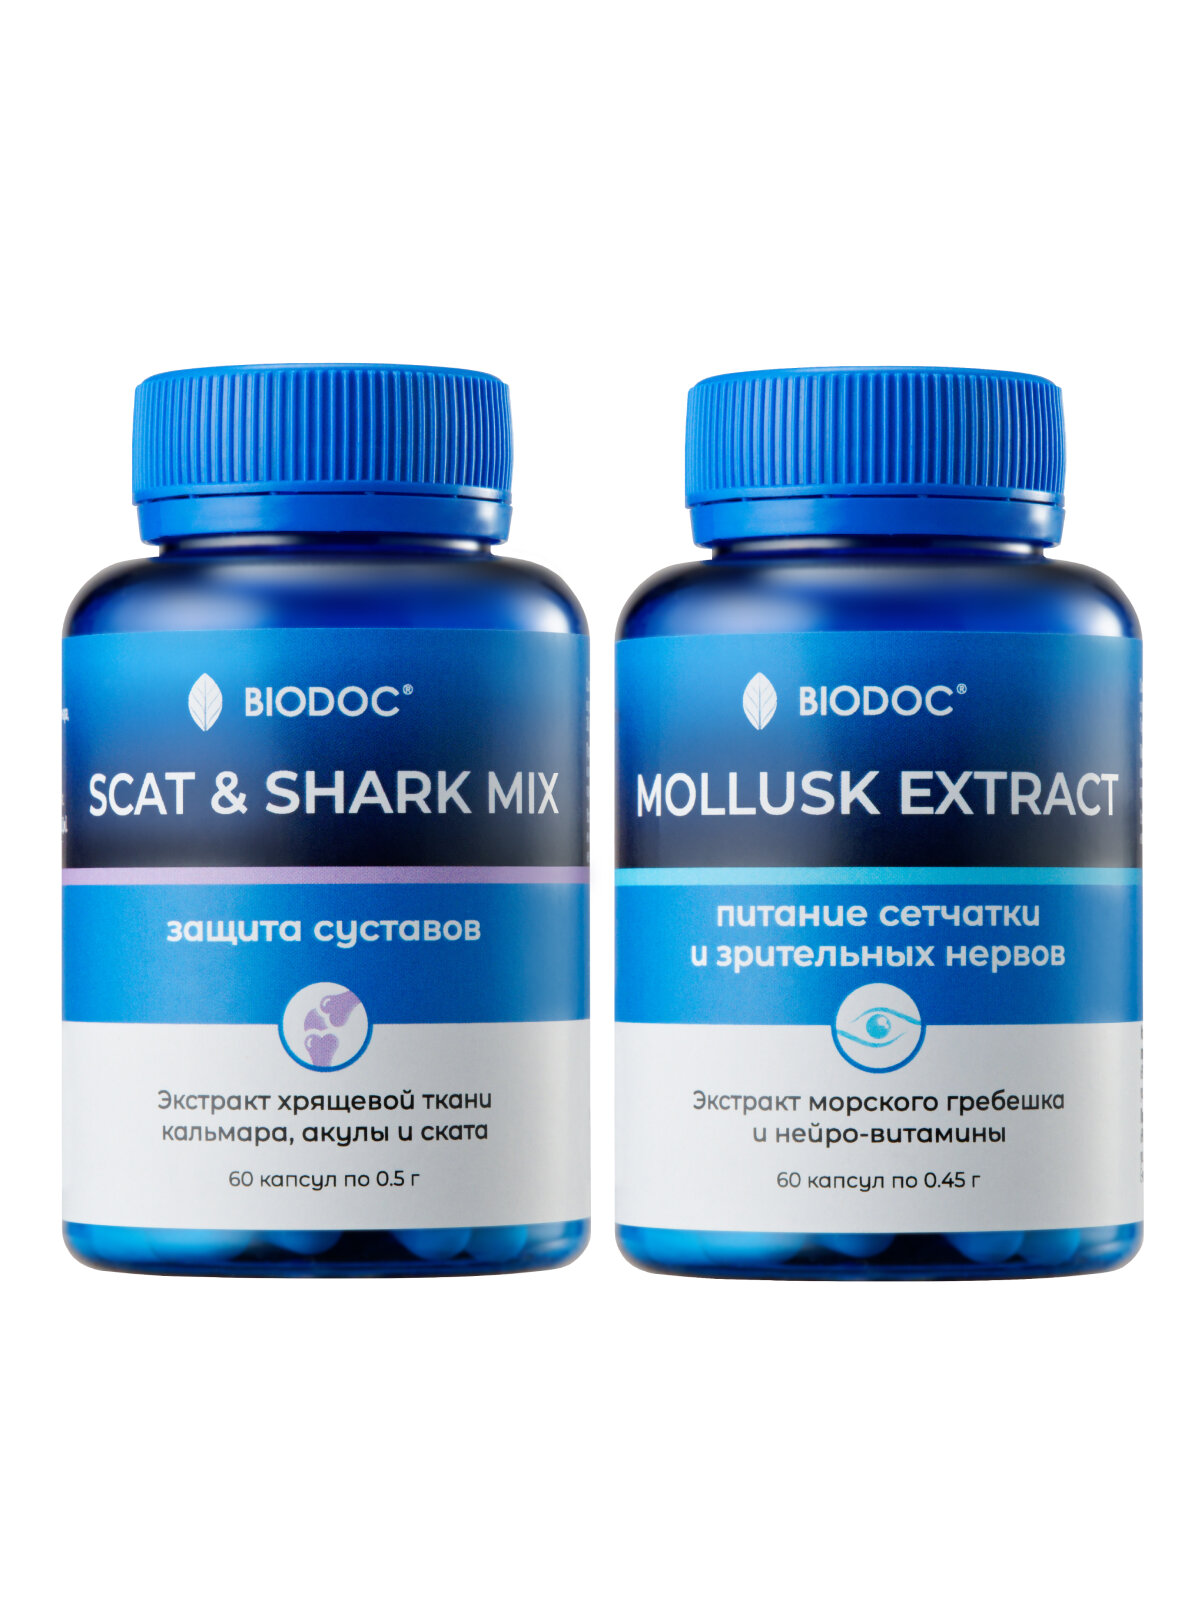 BIODOC Набор пищевых добавок для защиты зрения и суставов SCAT & SHARK MIX и MOLLUSK EXTRACT